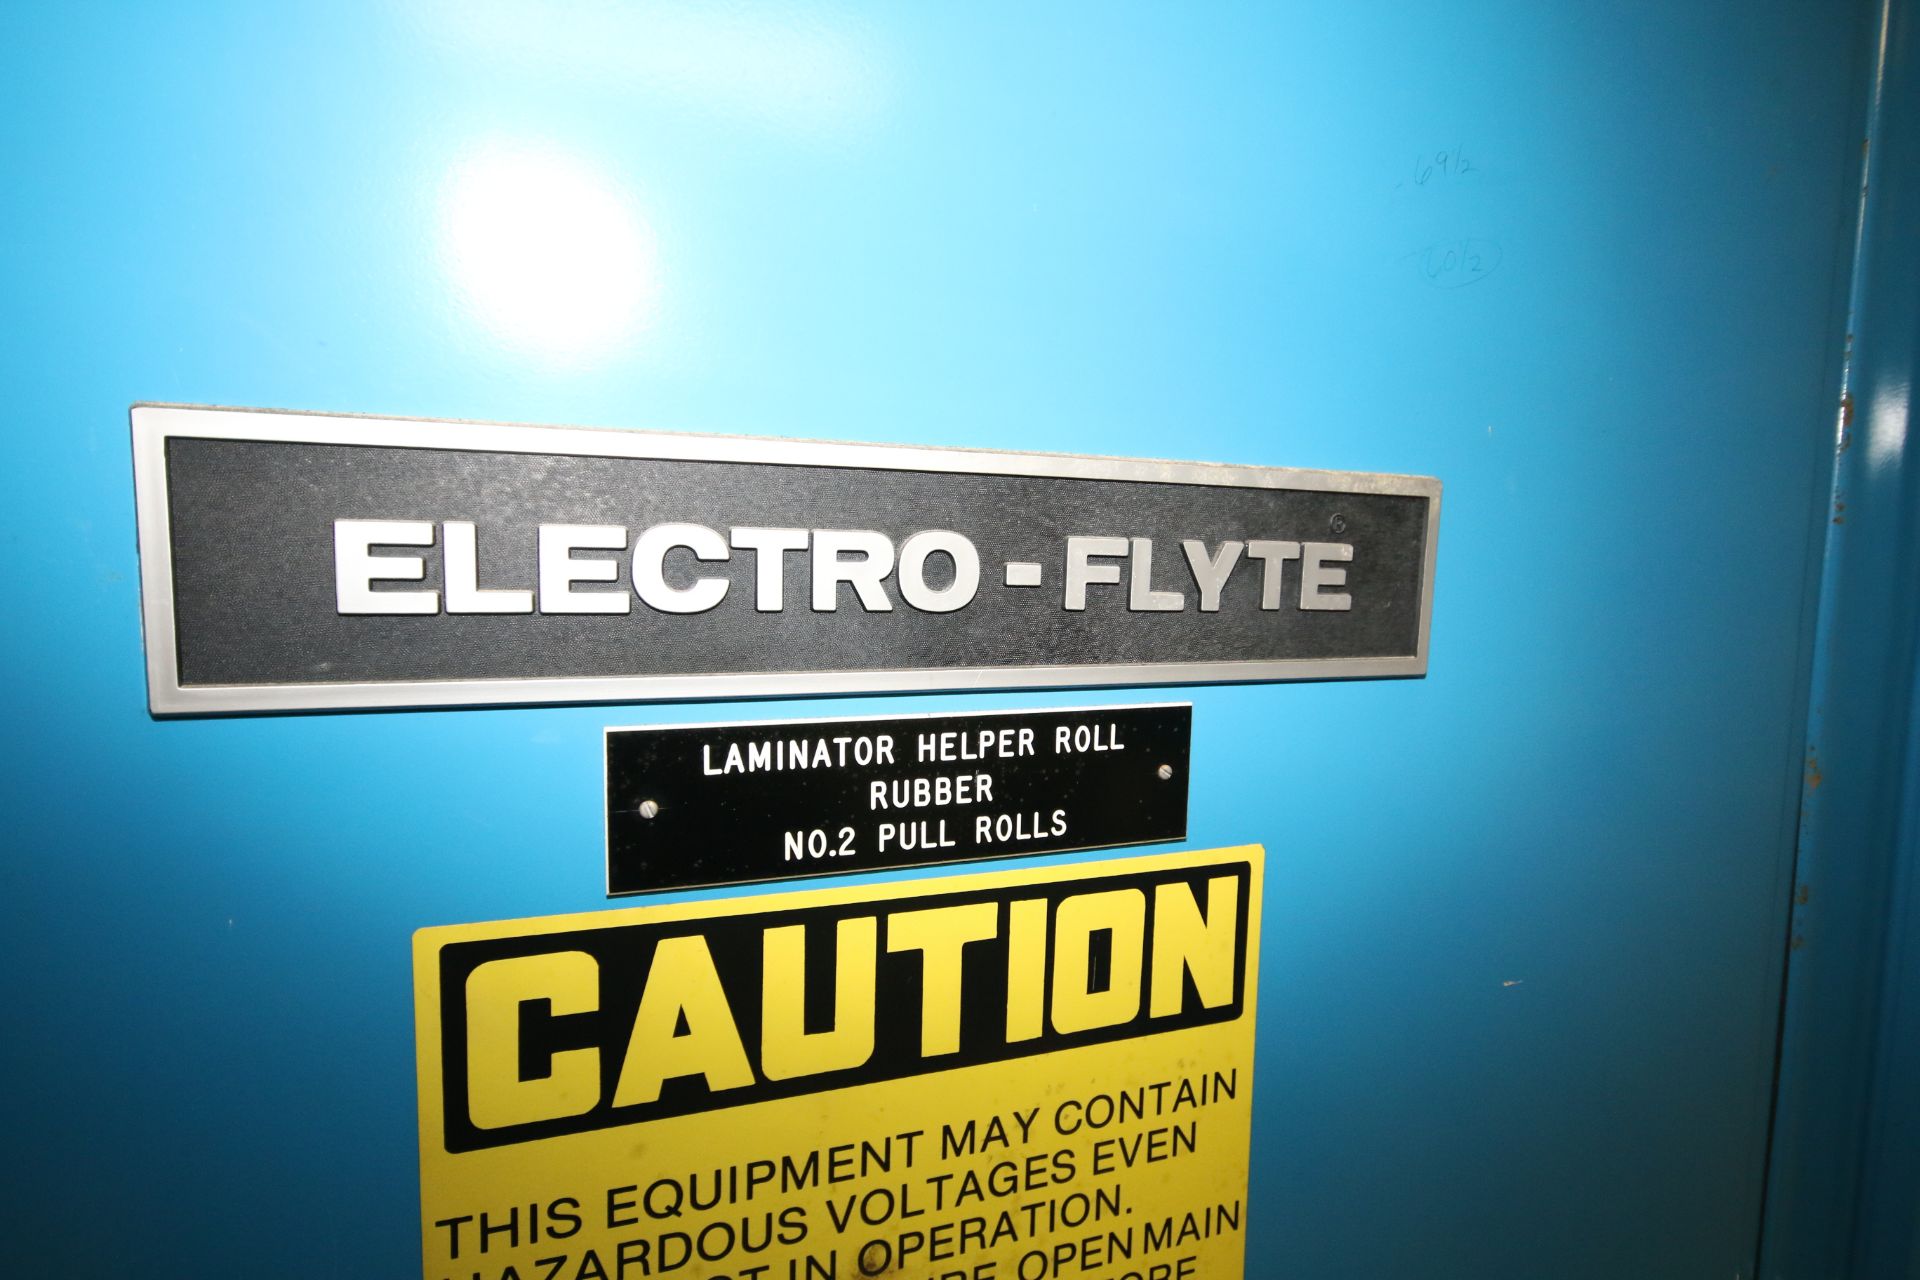 Web Line Electro Flyte Single Door Control Panel for Coater Area #2 Controls Laminator Helper Roll - Image 4 of 4